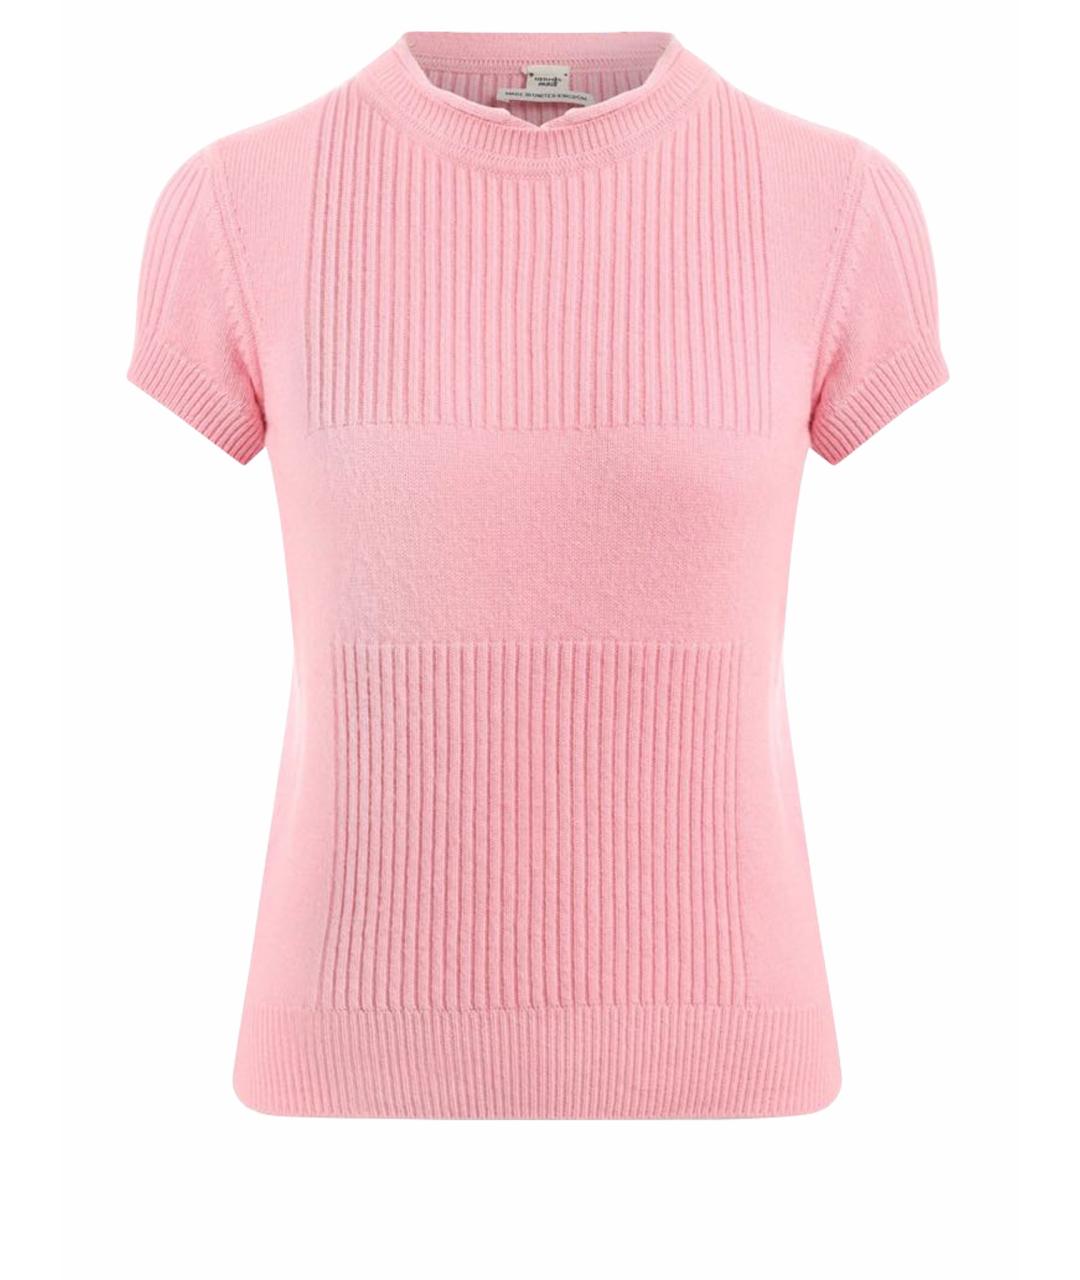 HERMES PRE-OWNED Розовый кашемировый джемпер / свитер, фото 1